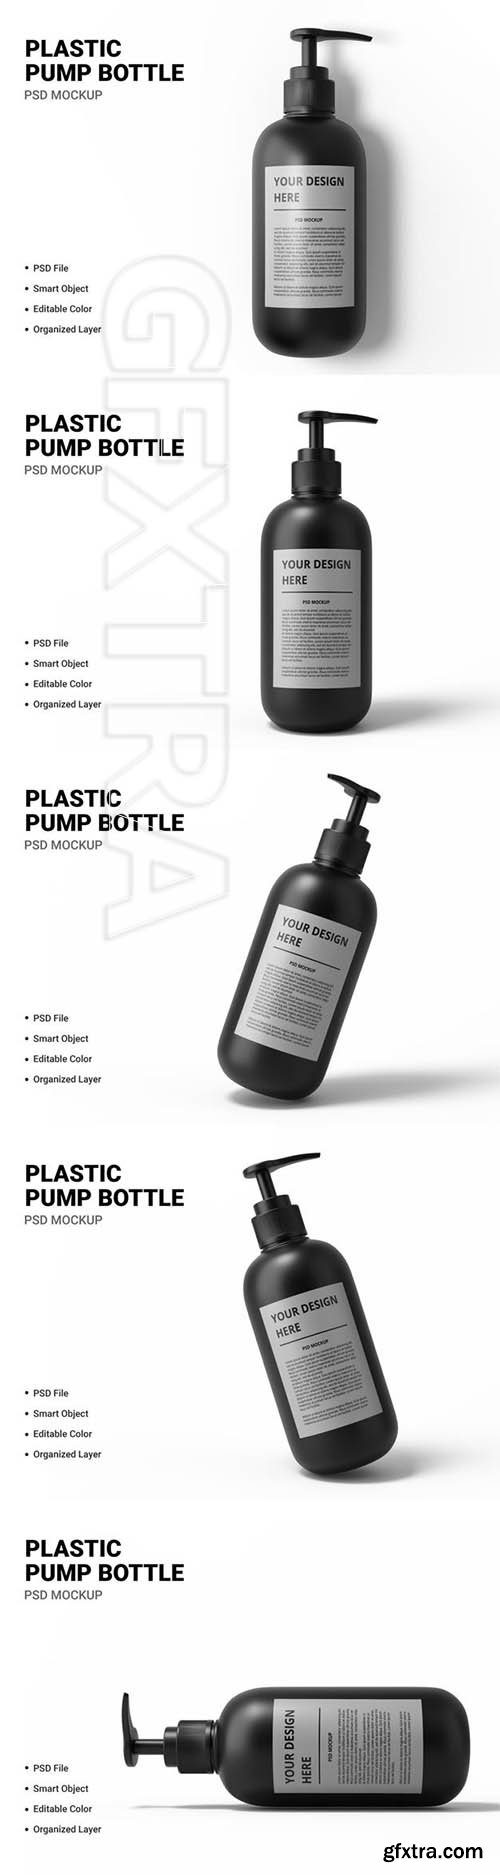 Plastic pump bottle mockup